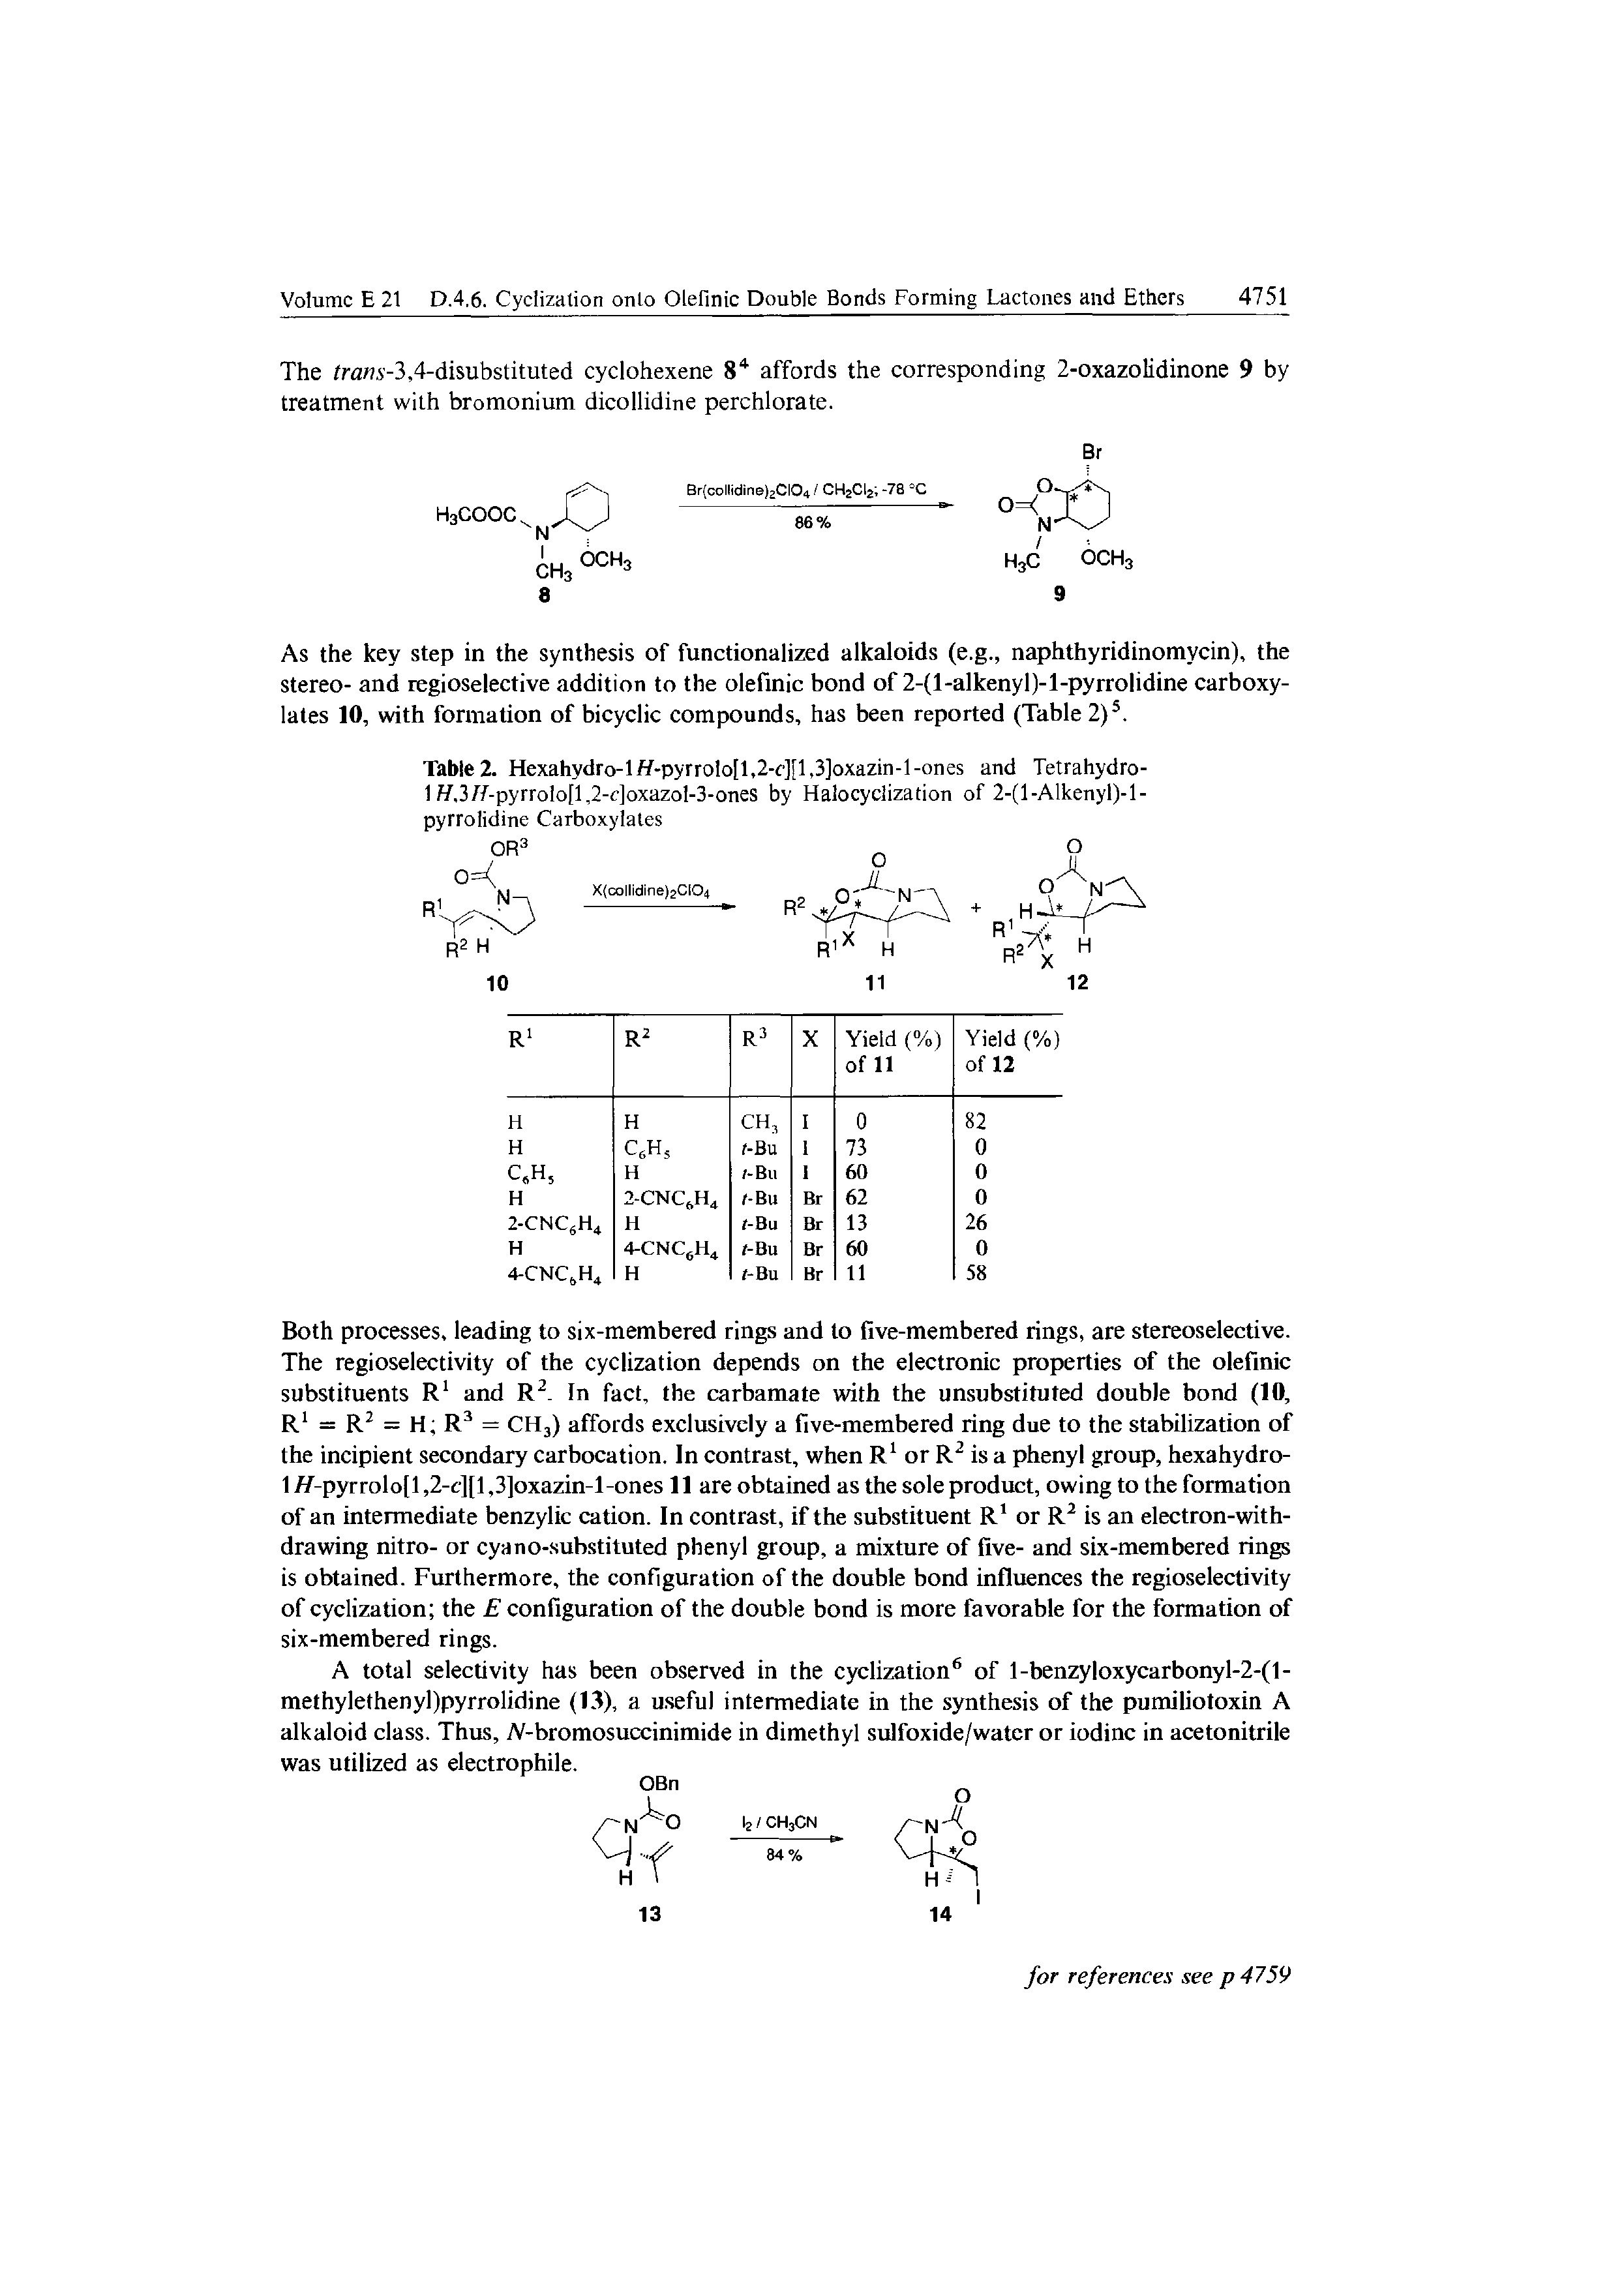 Table2. Hexahydro-lff-pyrrolo[l,2-e][l,3]oxazin-l-ones and Tetrahydro-1 f/,3/f-pyrrolo[l,2-c]oxazol-3-ones by Halocyclization of 2-(l-Alkenyl)-l-pyrrolidine Carboxylates...